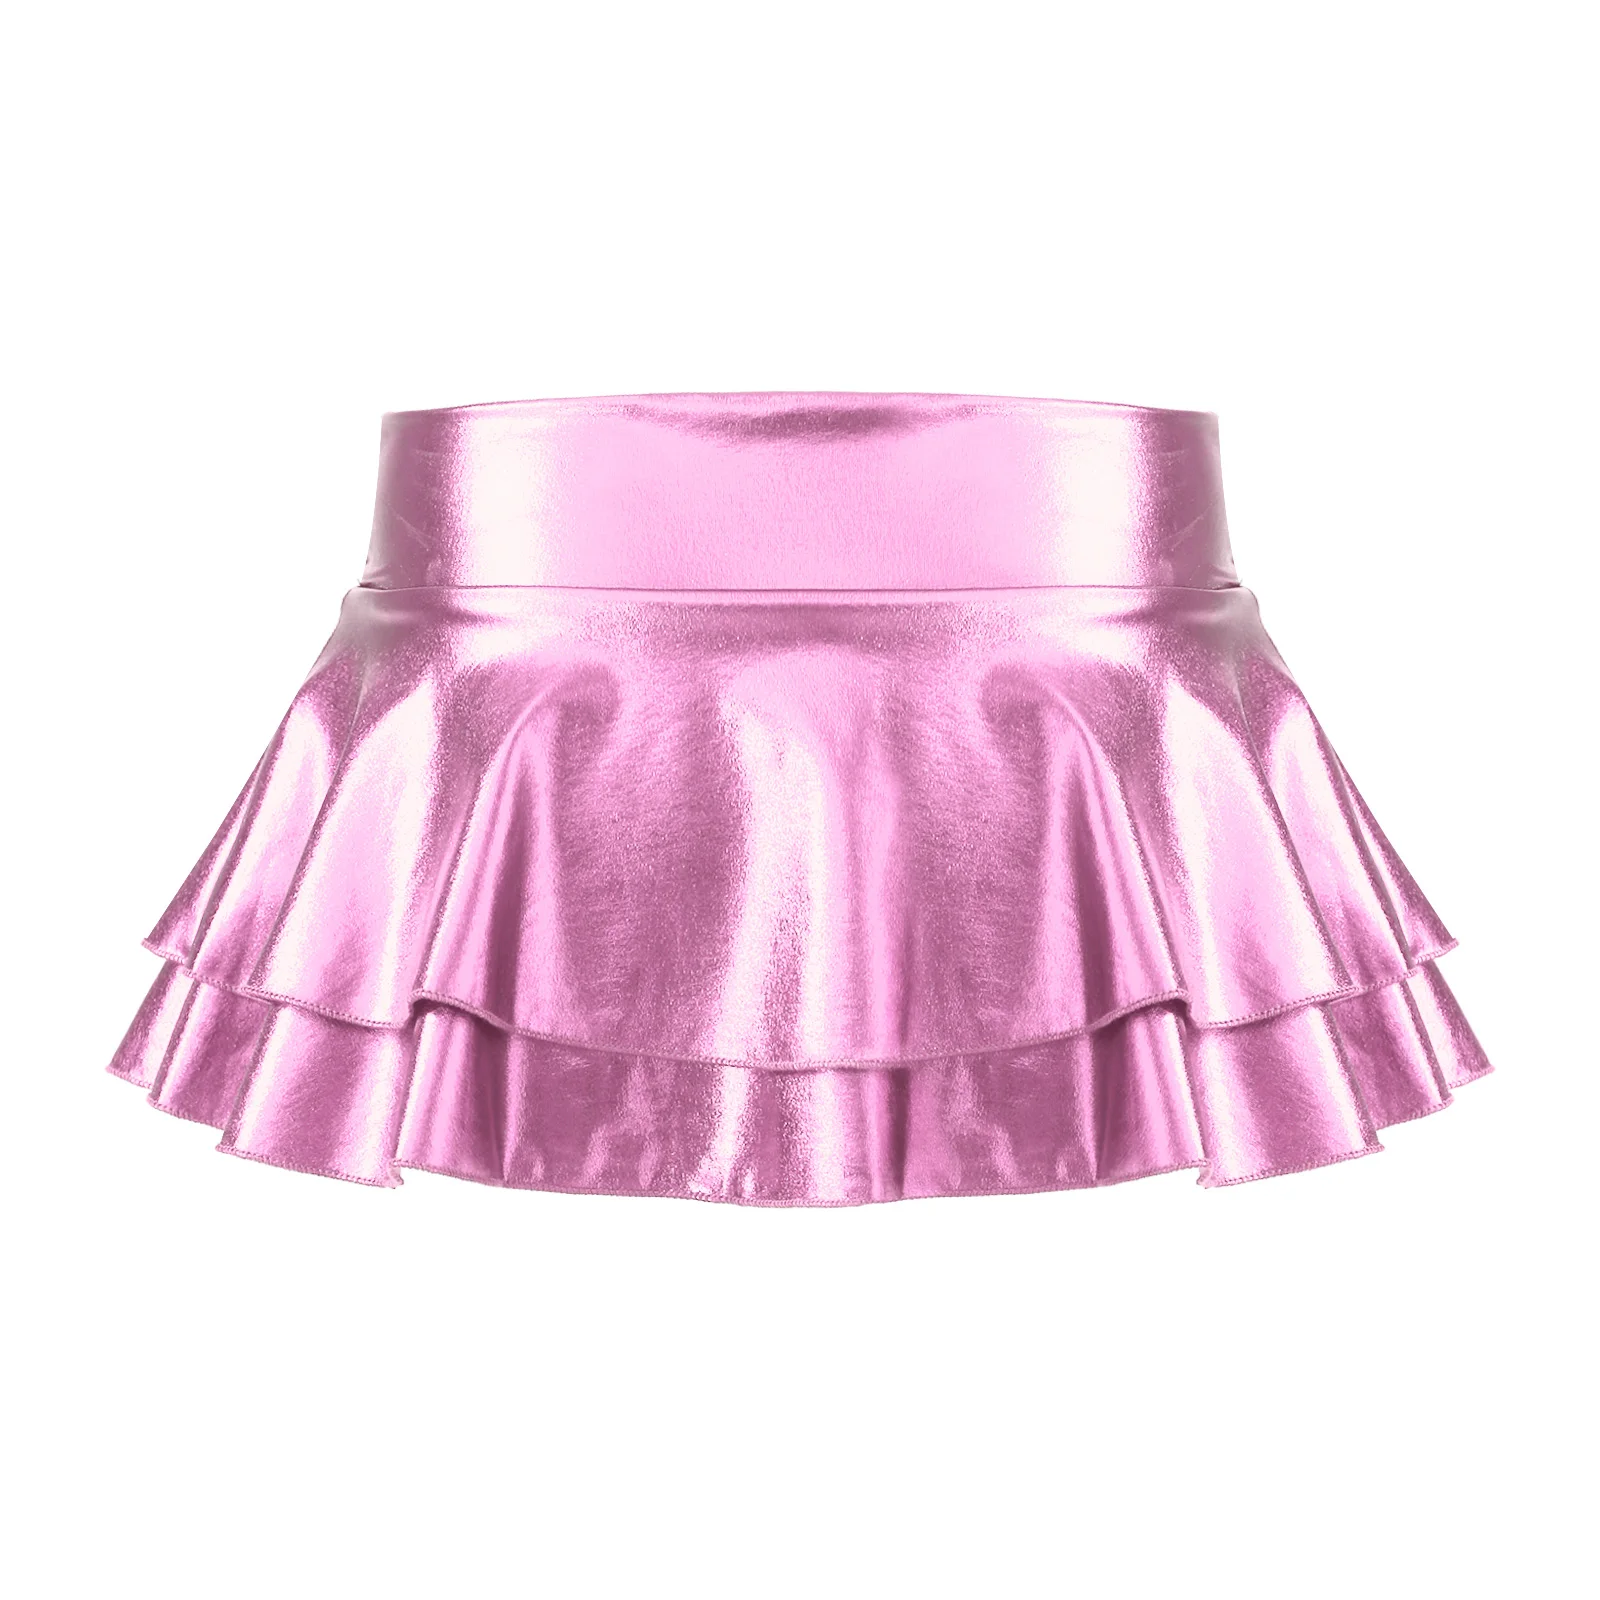 

Women's Mini Skirts Shiny Metallic Low Rise Double Layered Ruffled Short Mini Skirt Rave Festival Clubwear for Pole Dancing